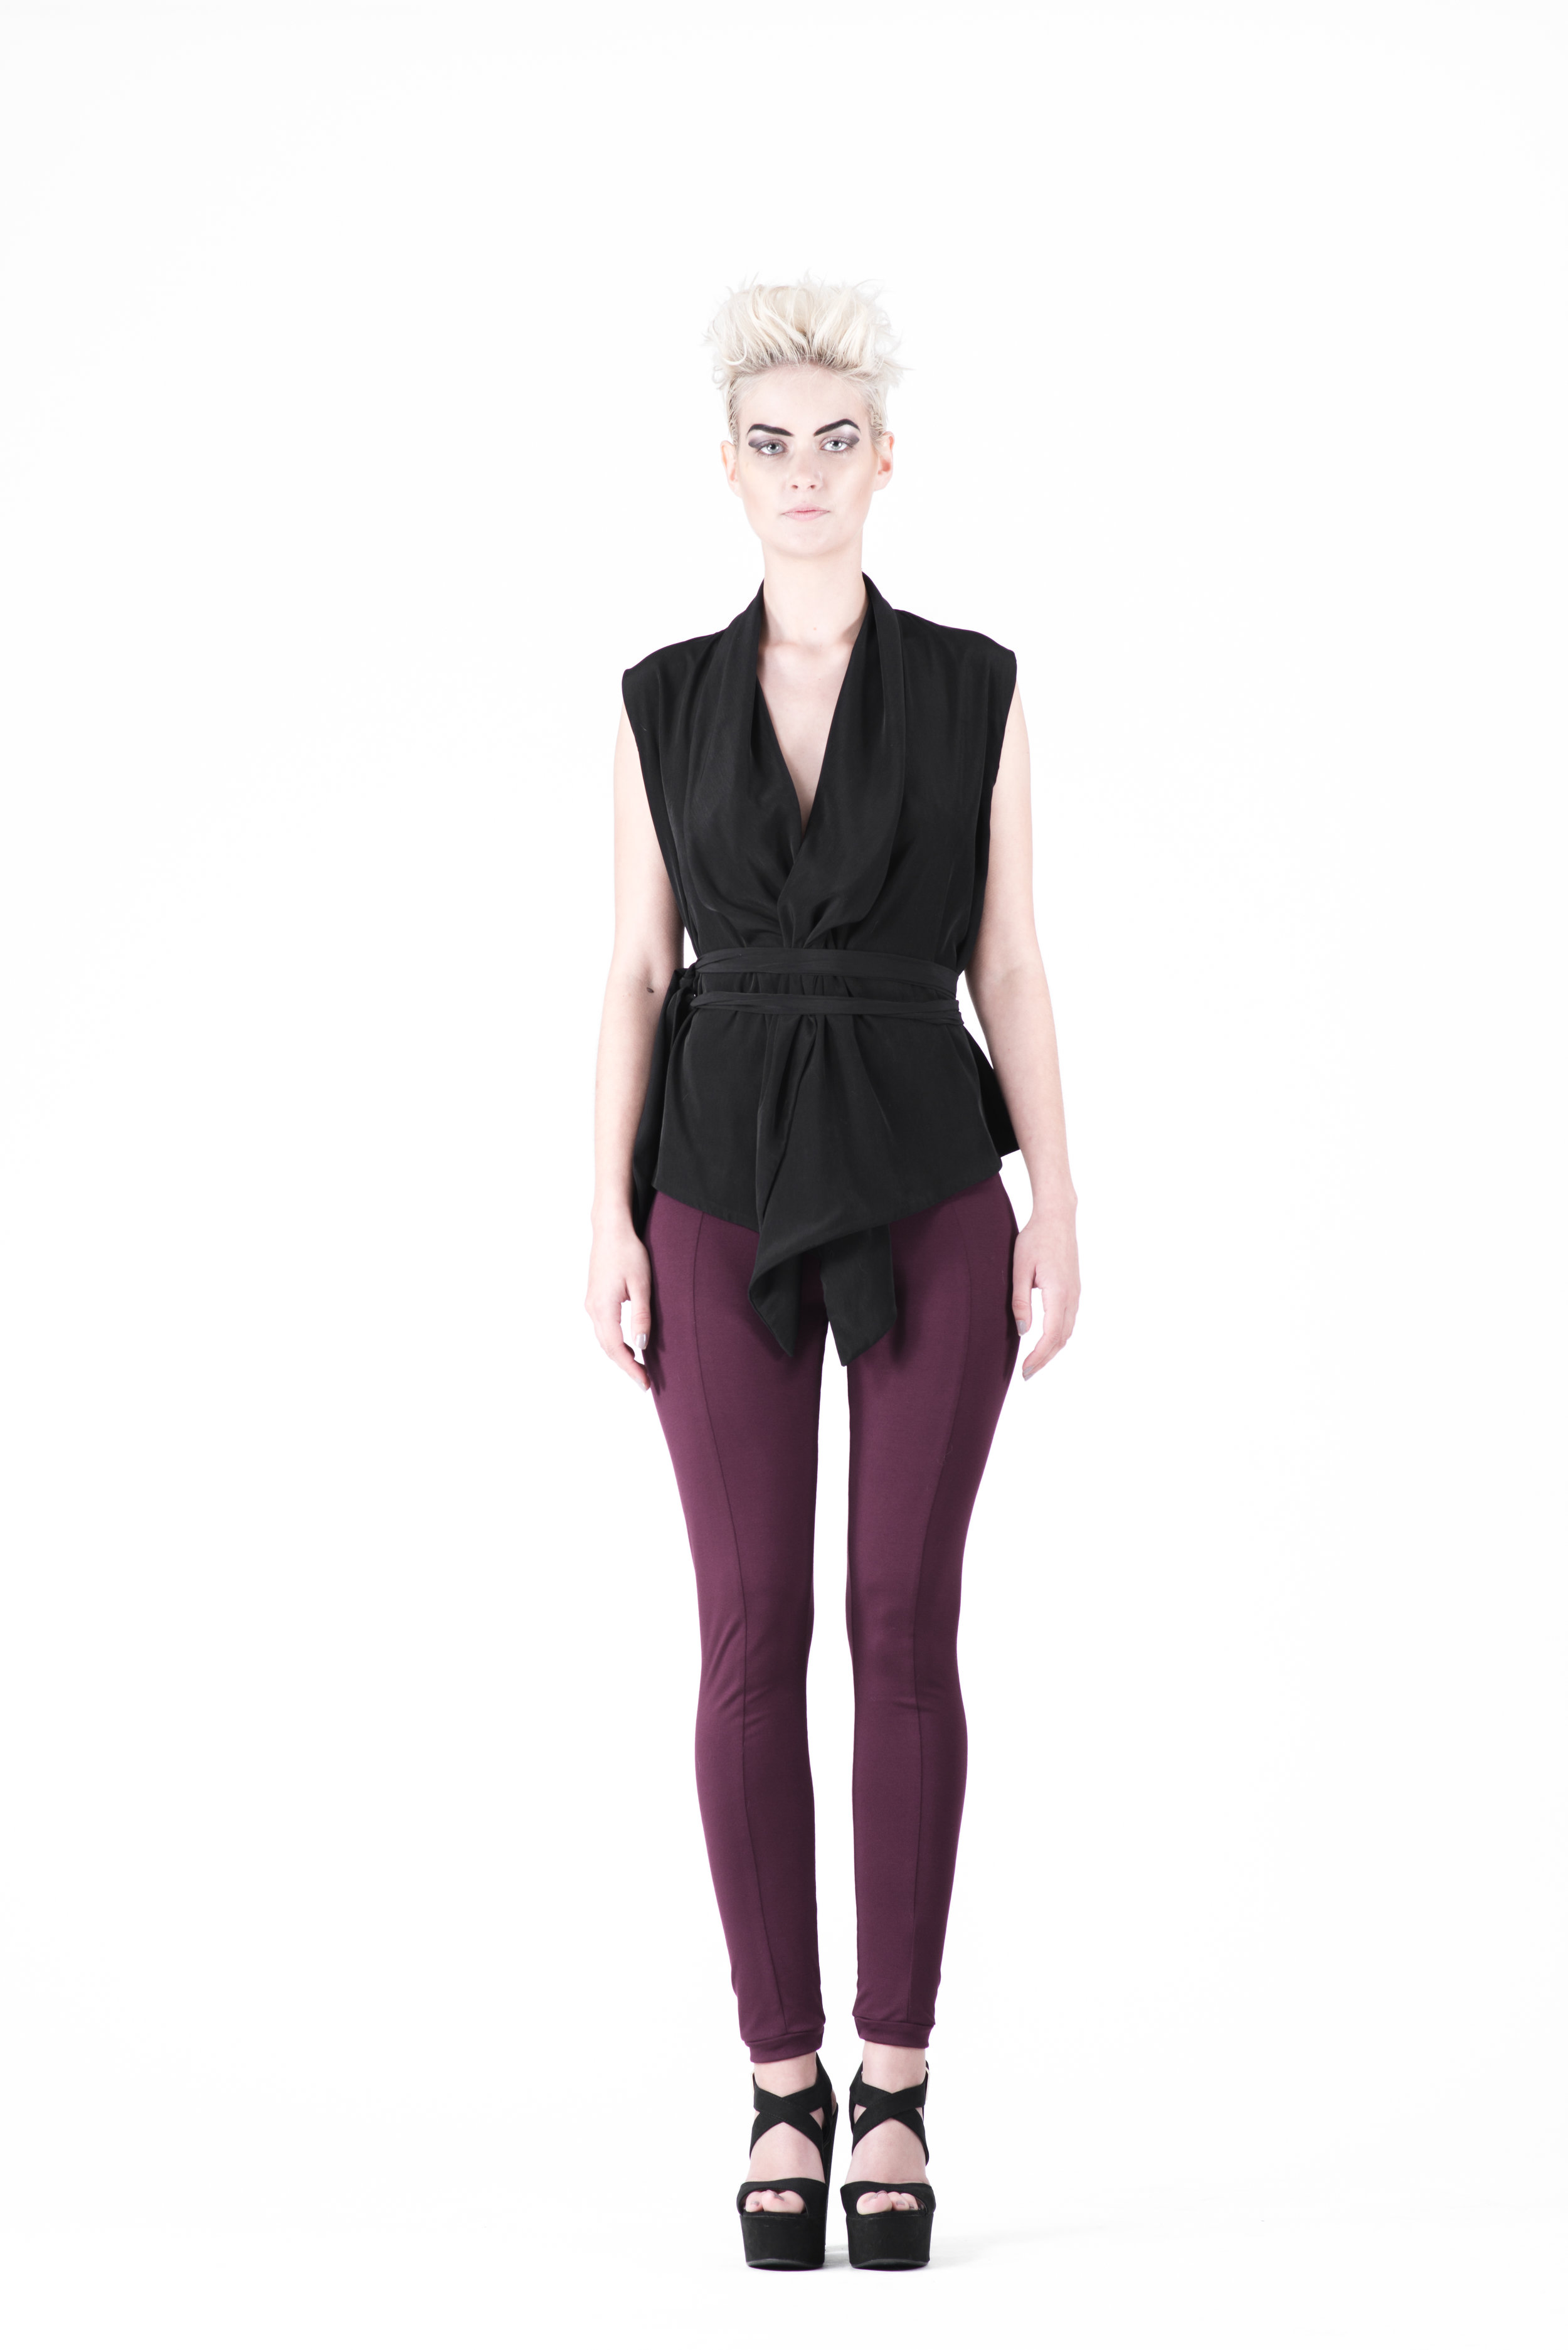 zaramia-ava-zaramiaava-leeds-fashion-designer-ethical-sustainable-tailored-minimalist-mioka-top-obi-belt-black-rei-plum-versatile-drape-cowl-styling-womenswear-models-photoshoot-50